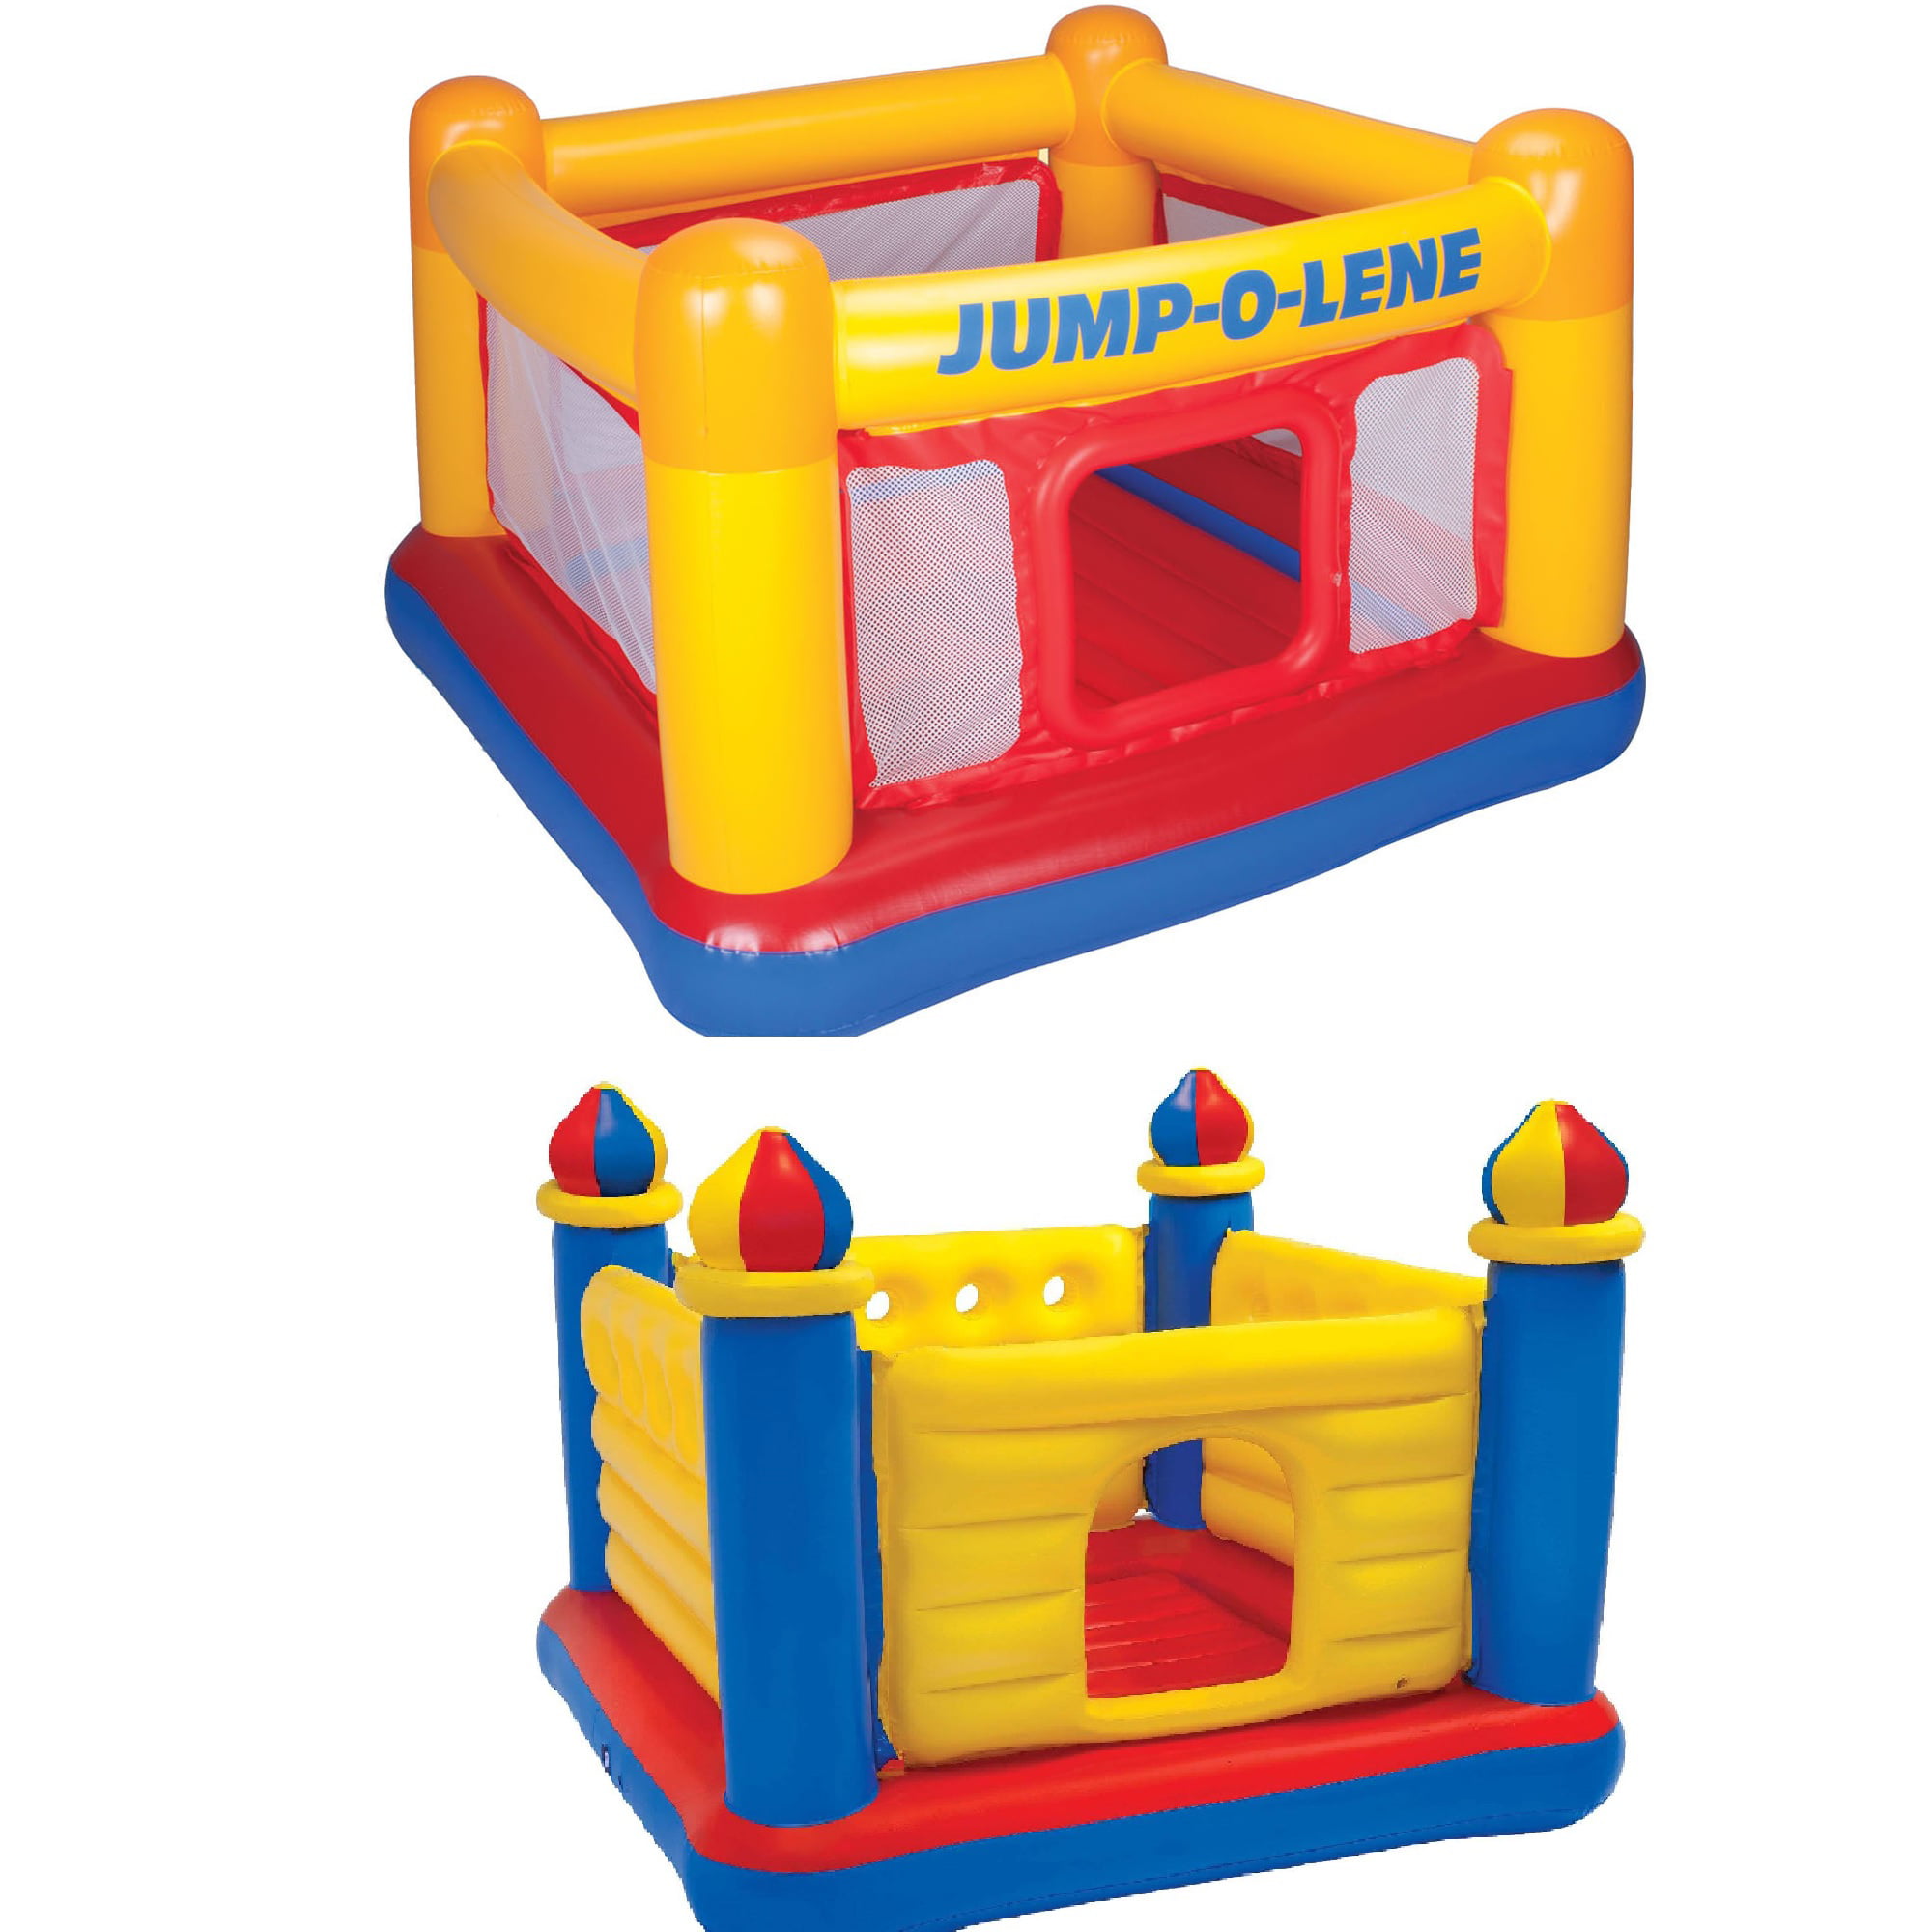 Jump-O-Lene Kids Children Blow Up Inflatable Bouncy Jump House Air Play Castle 